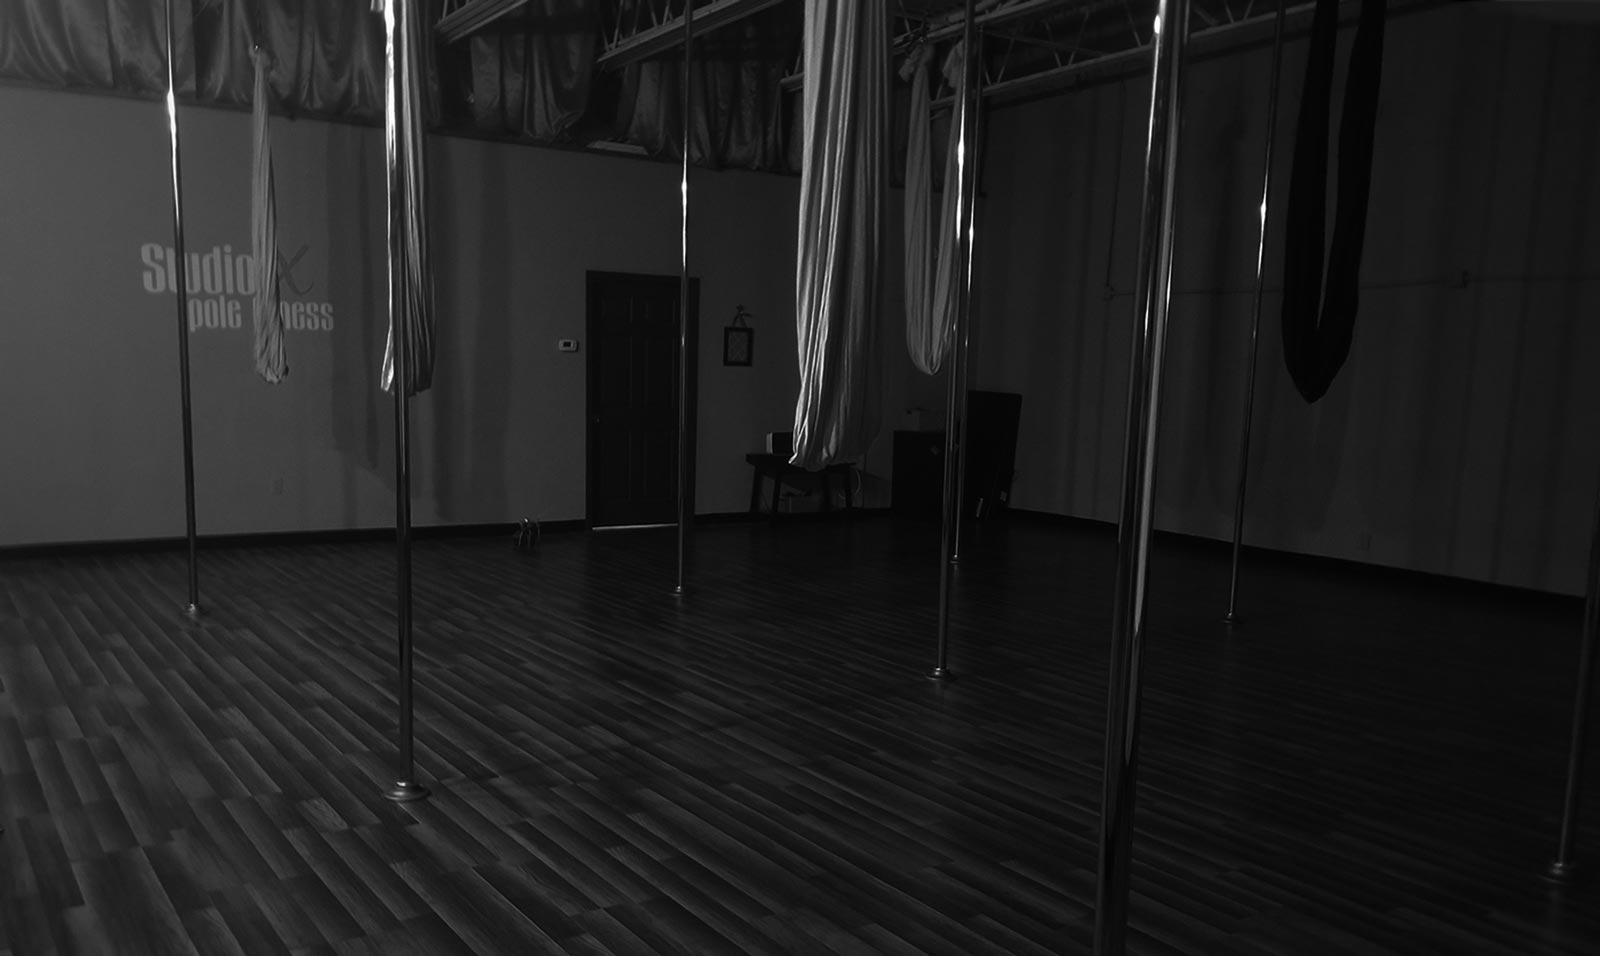 ATX Pole Fitness - Pole Dance Studio serving surrounding areas of